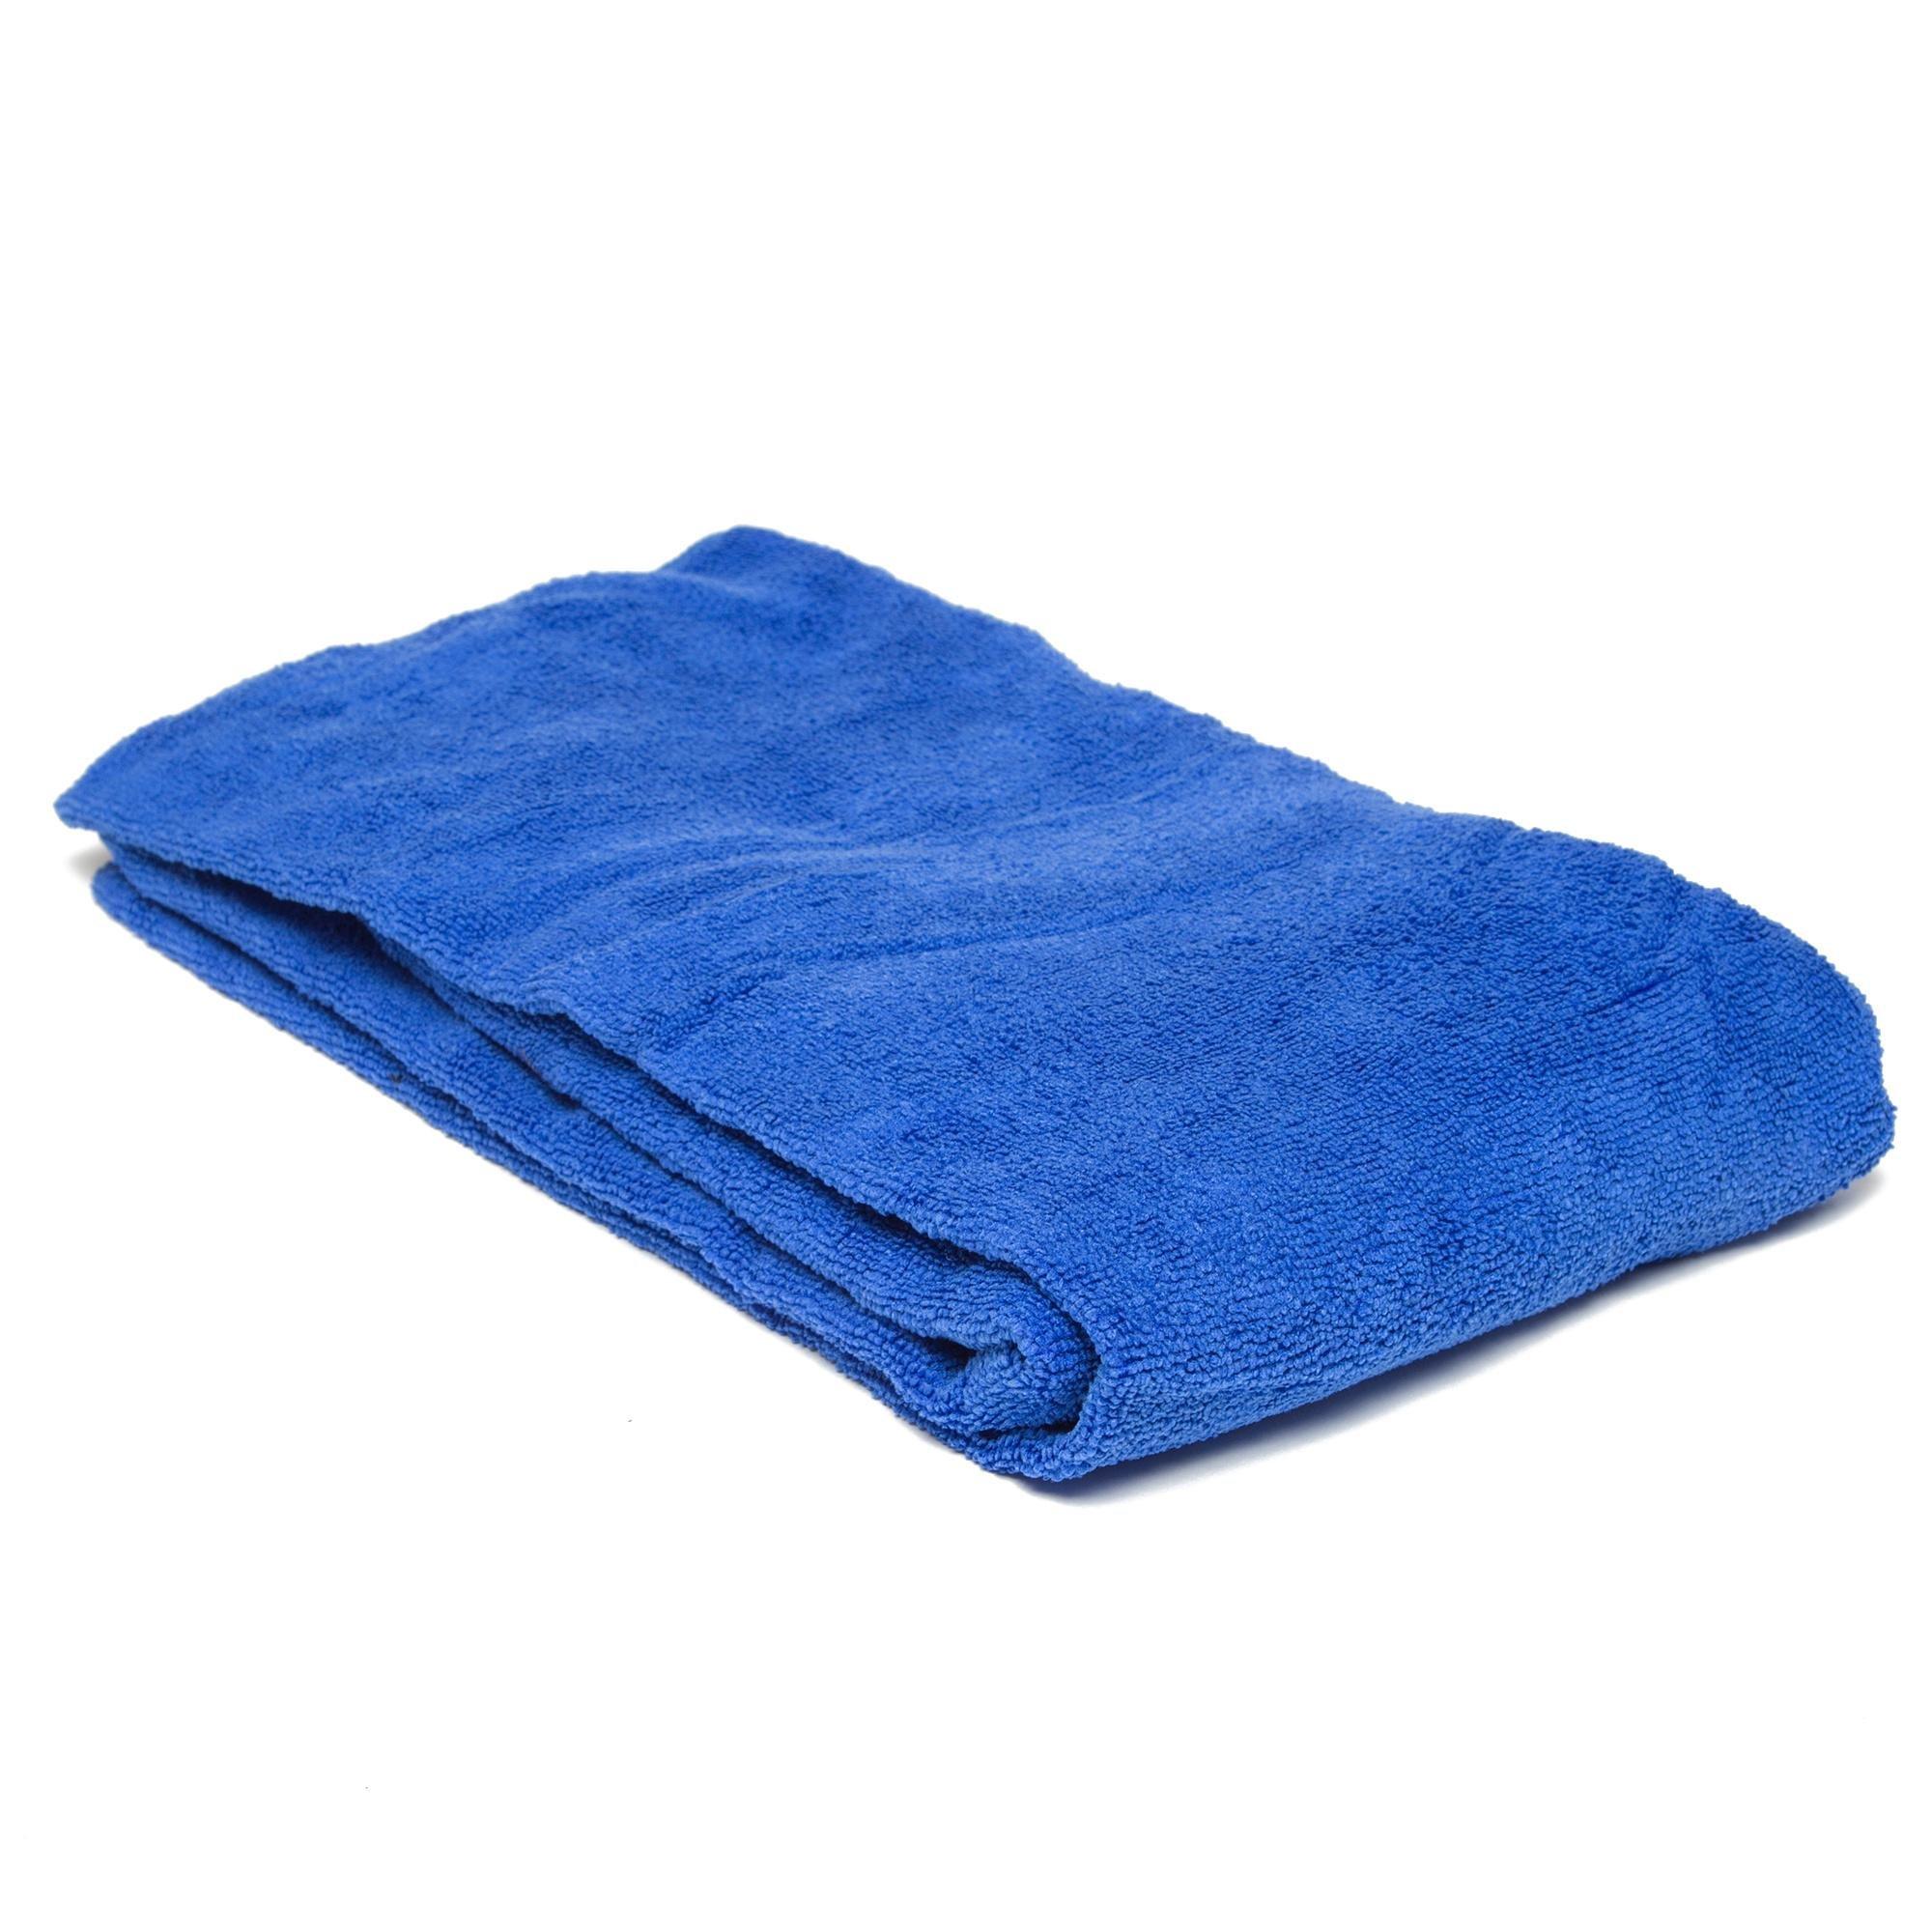 Eurohike Terry Microfibre Travel Towel - Medium - Blue/mbl  Blue/mbl